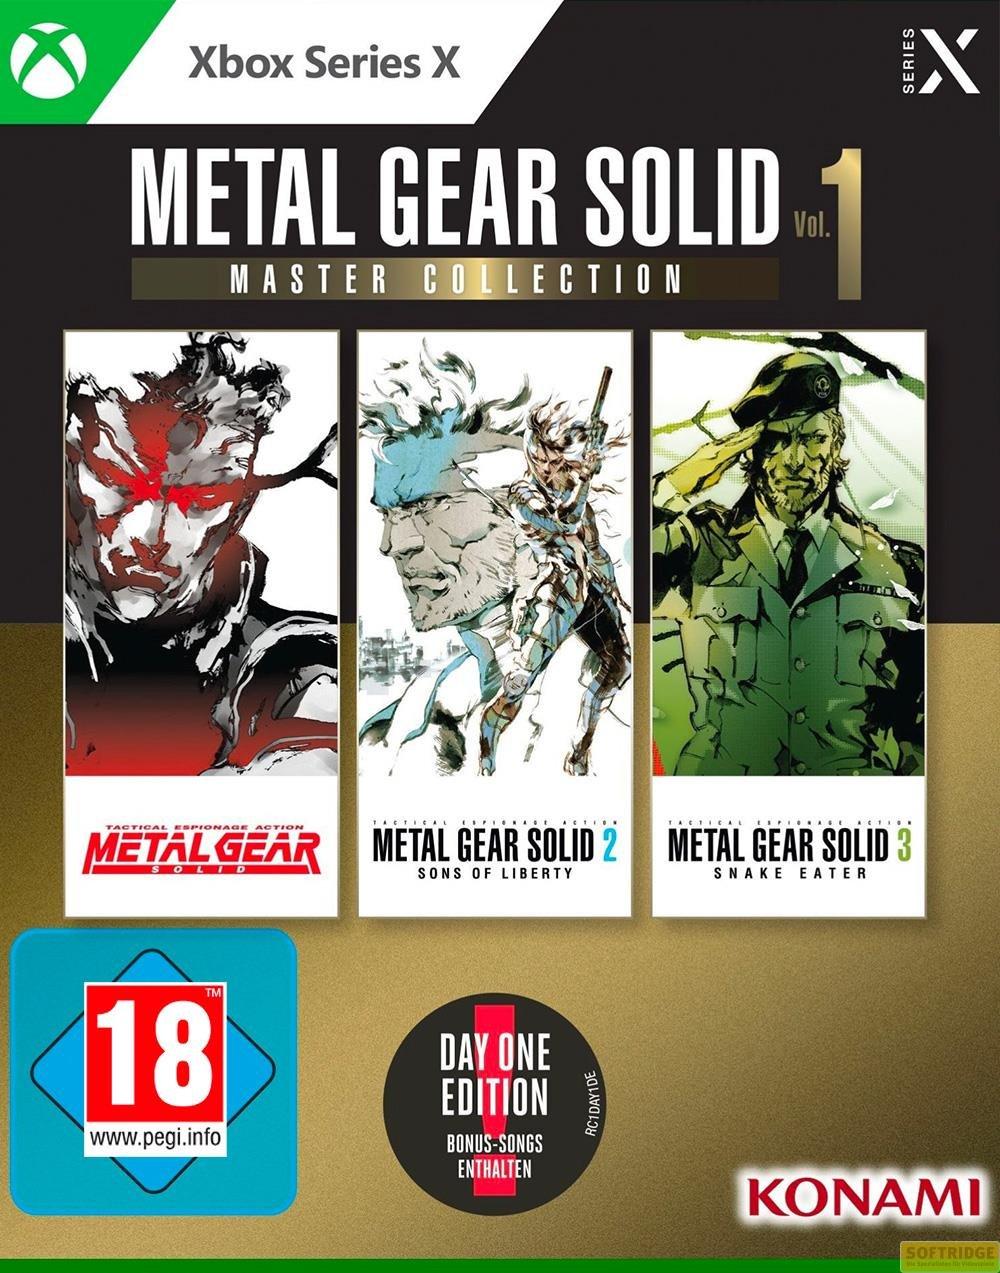 KONAMI  Metal Gear Solid: Master Collection Vol. 1 - Day 1 Edition 